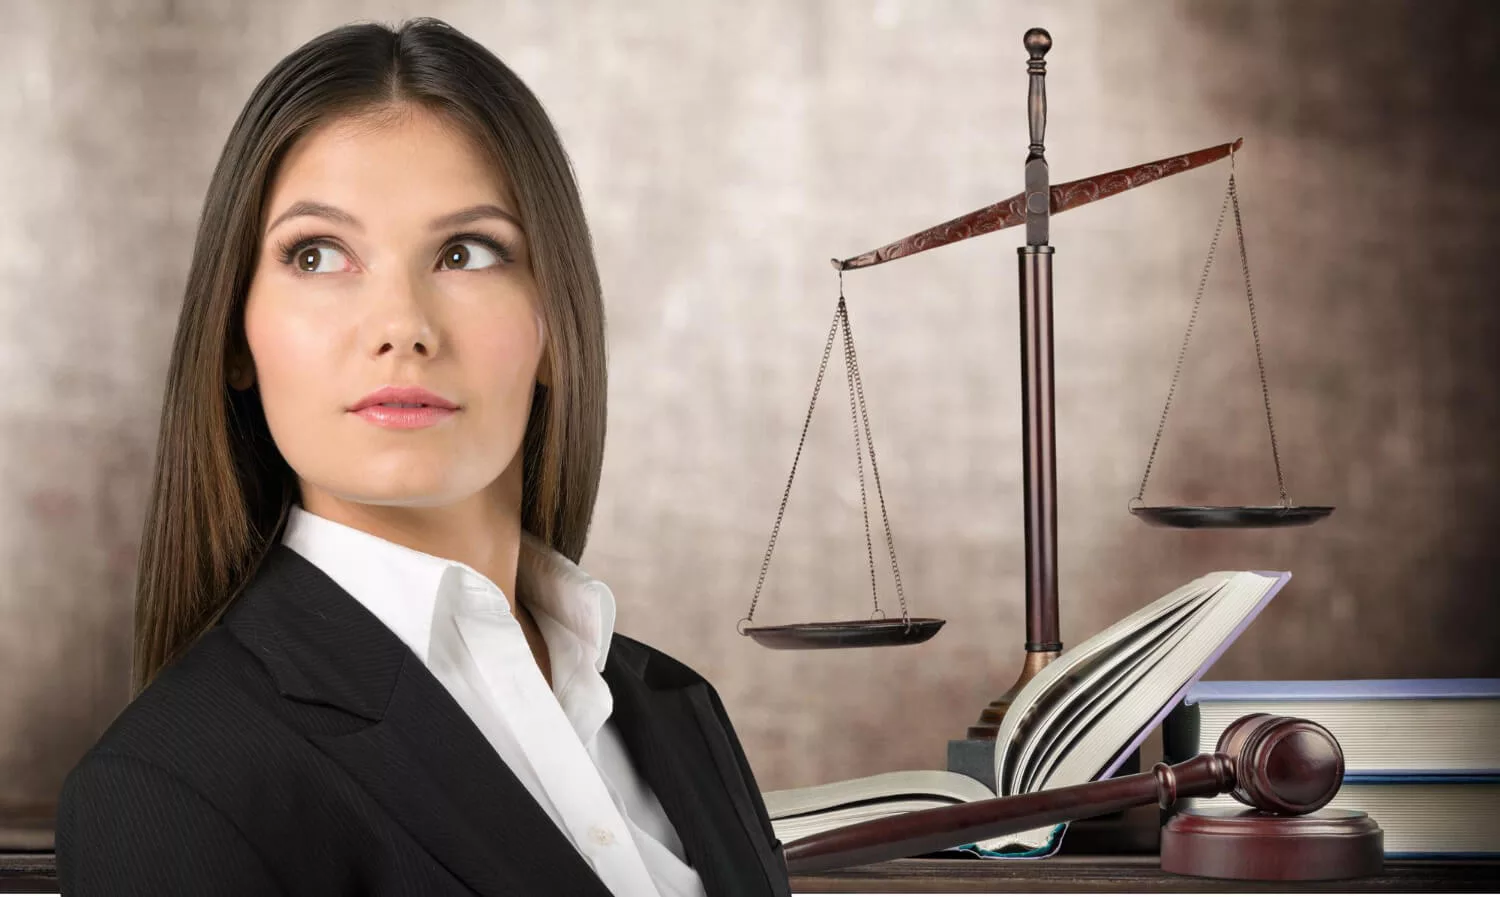 a lady lawyer